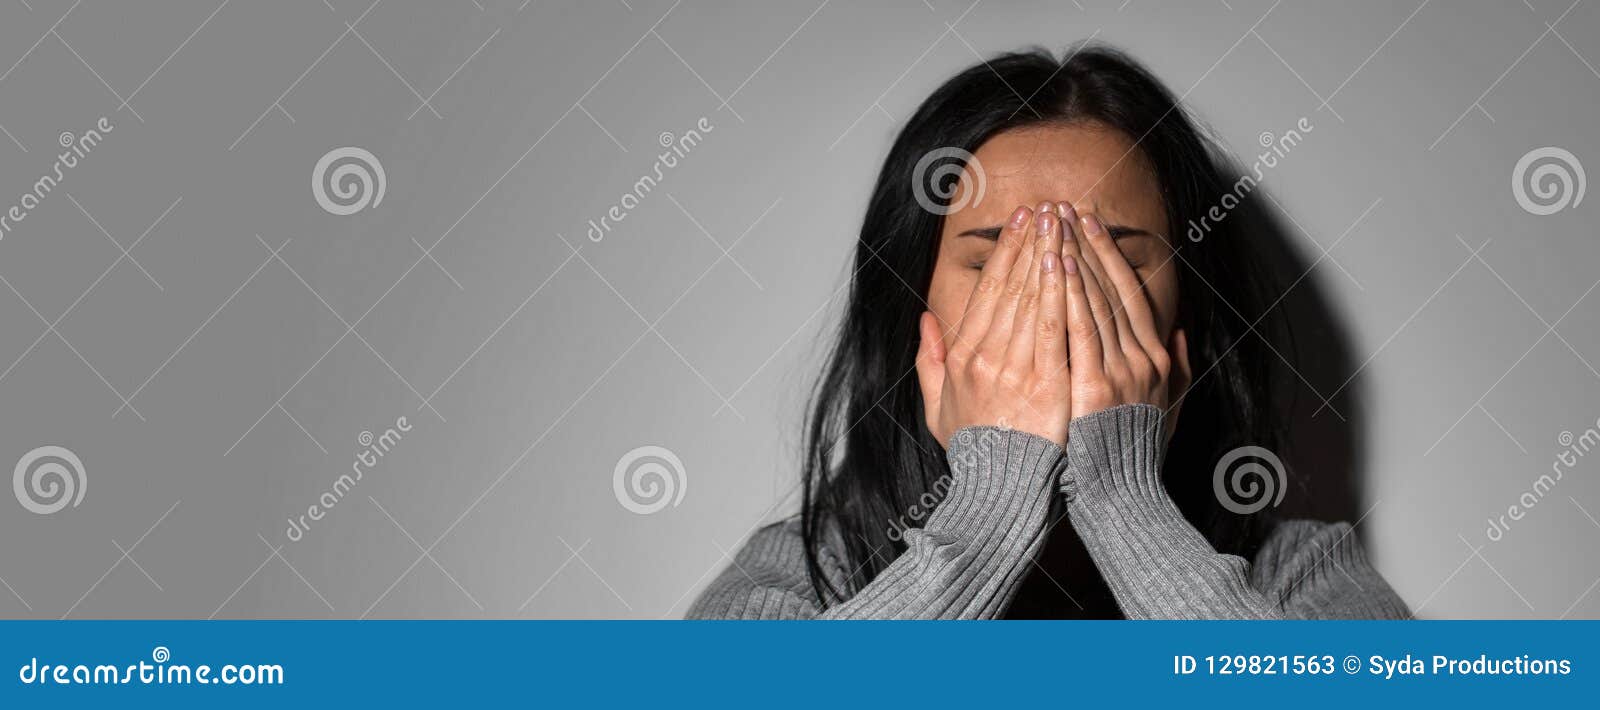 sad crying woman in despair